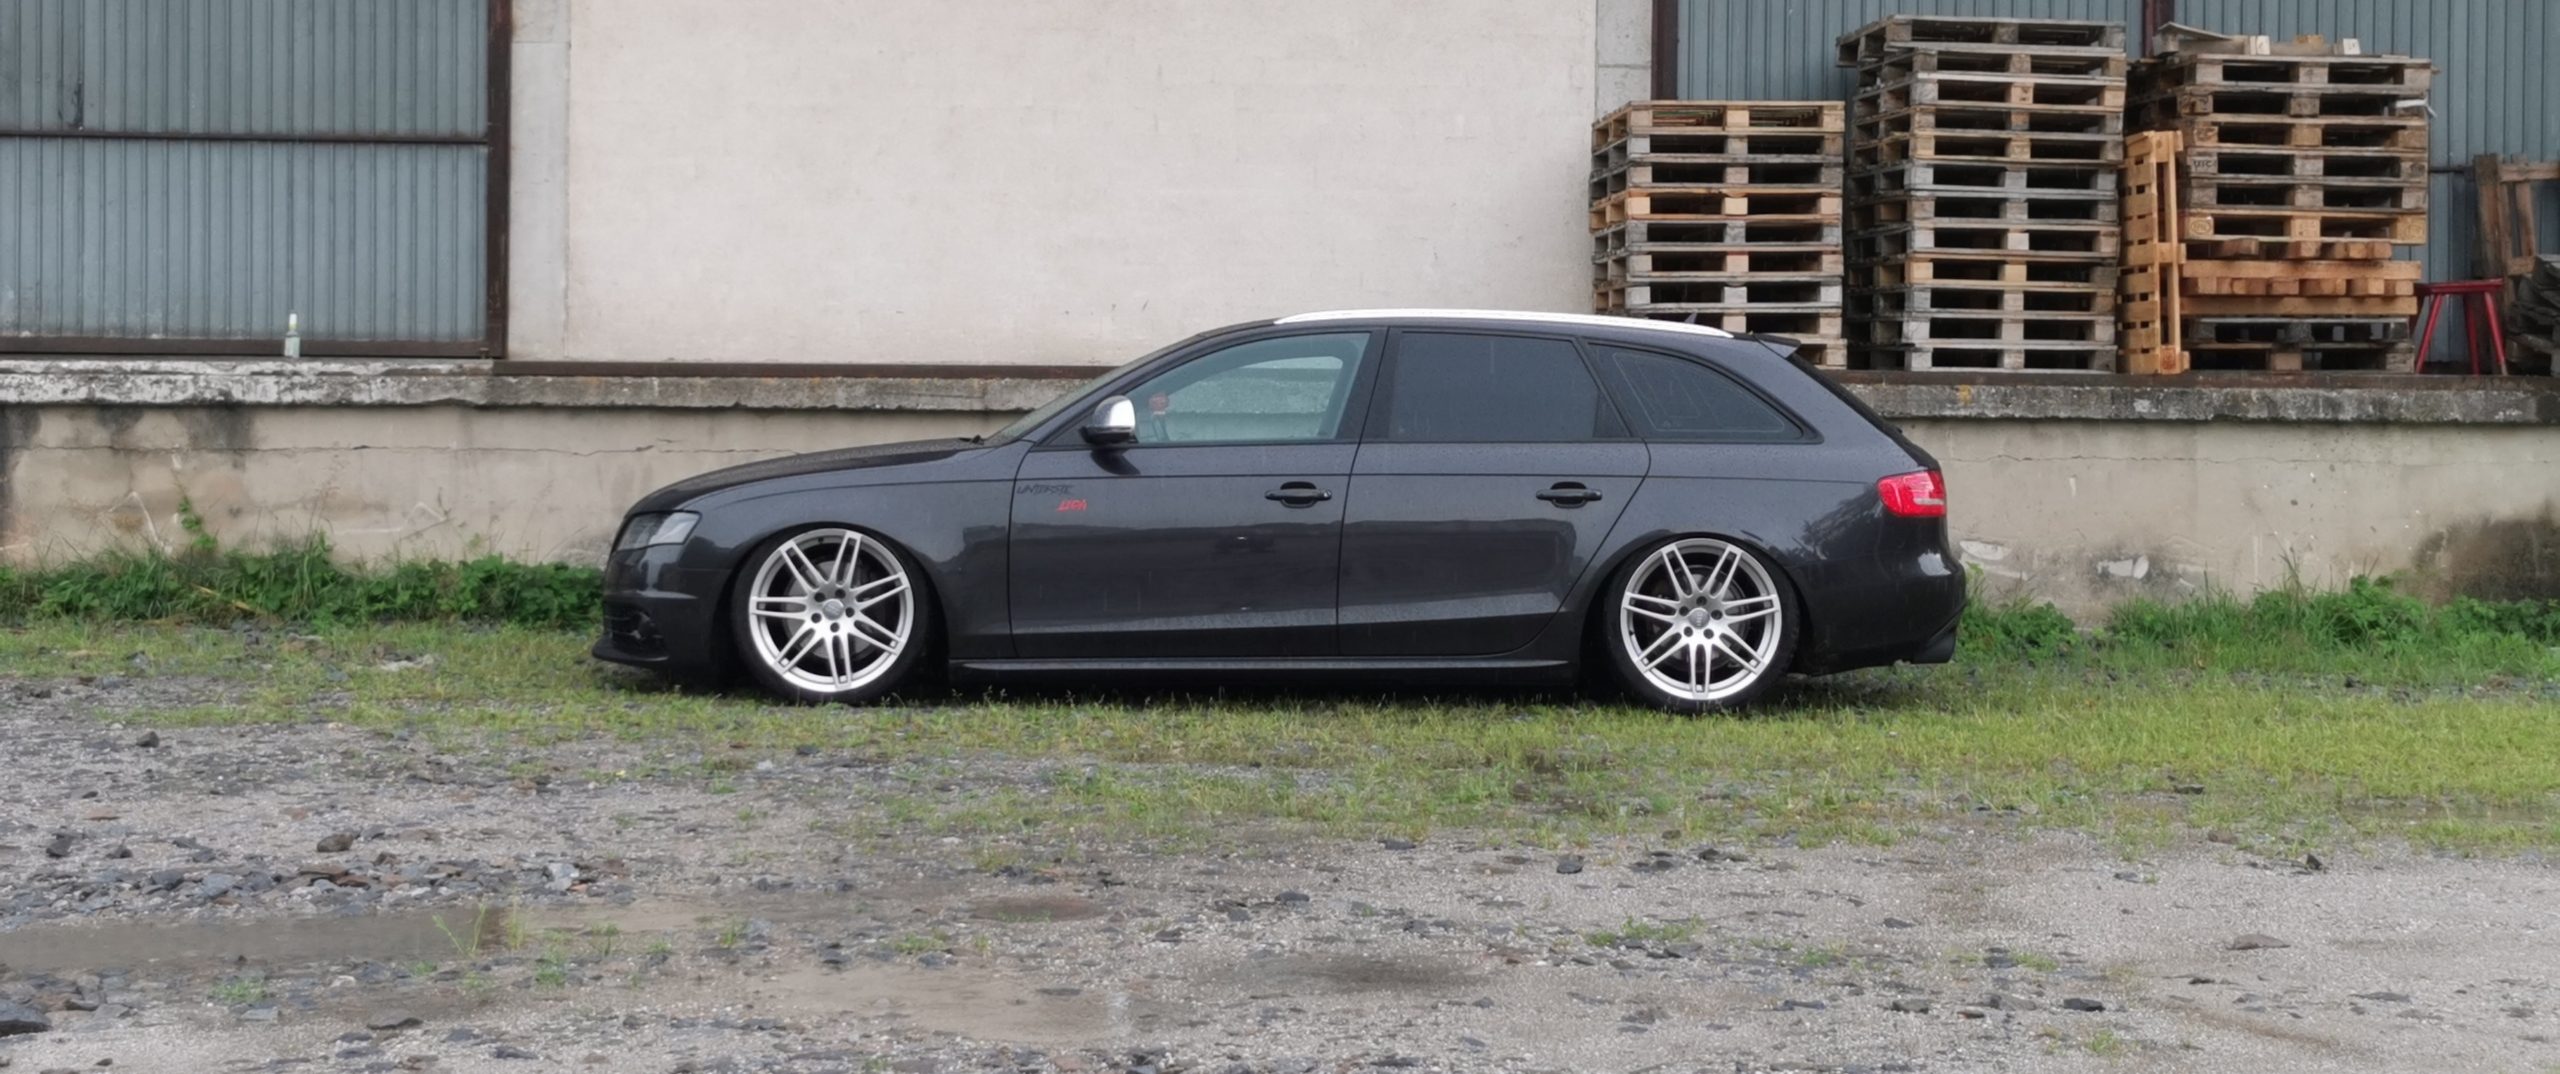 Audi – A4 – Speziallack – ORIGINAL AUDI – 7-Doppelspeichen-Design – Silber – 20 Zoll